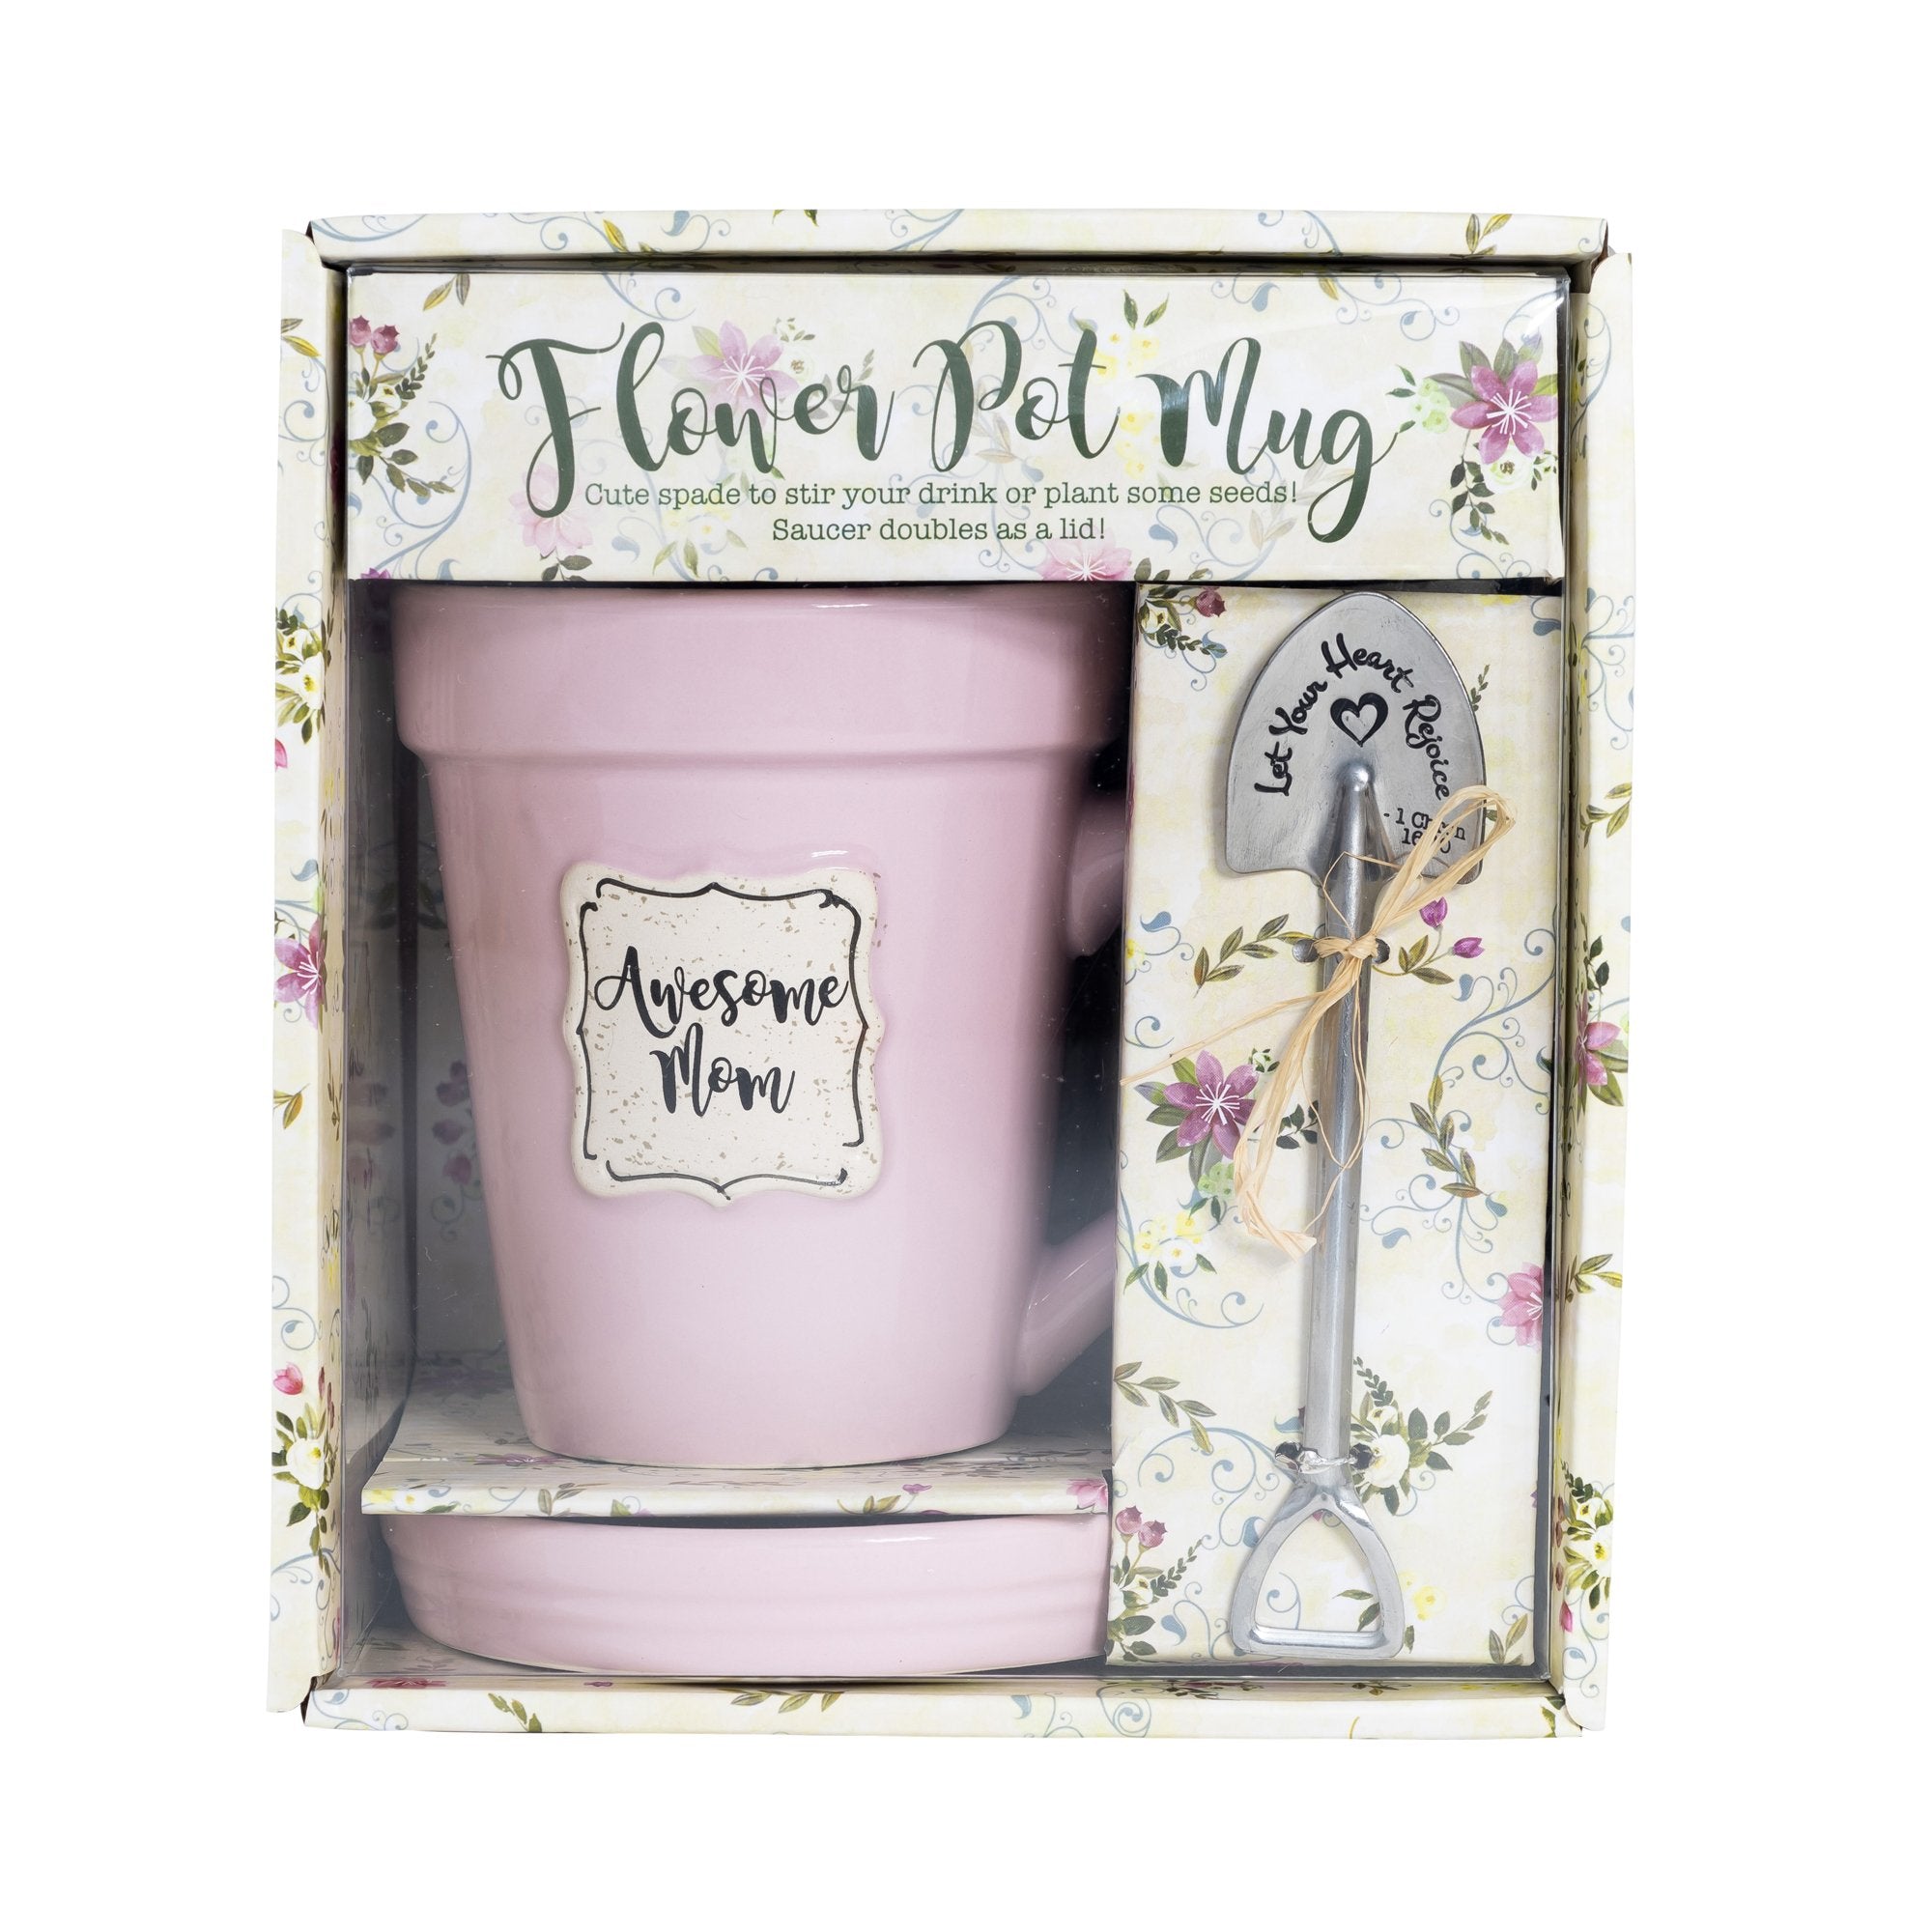 Pink Flower Pot Mug w/Scripture - "Awesome Mom"